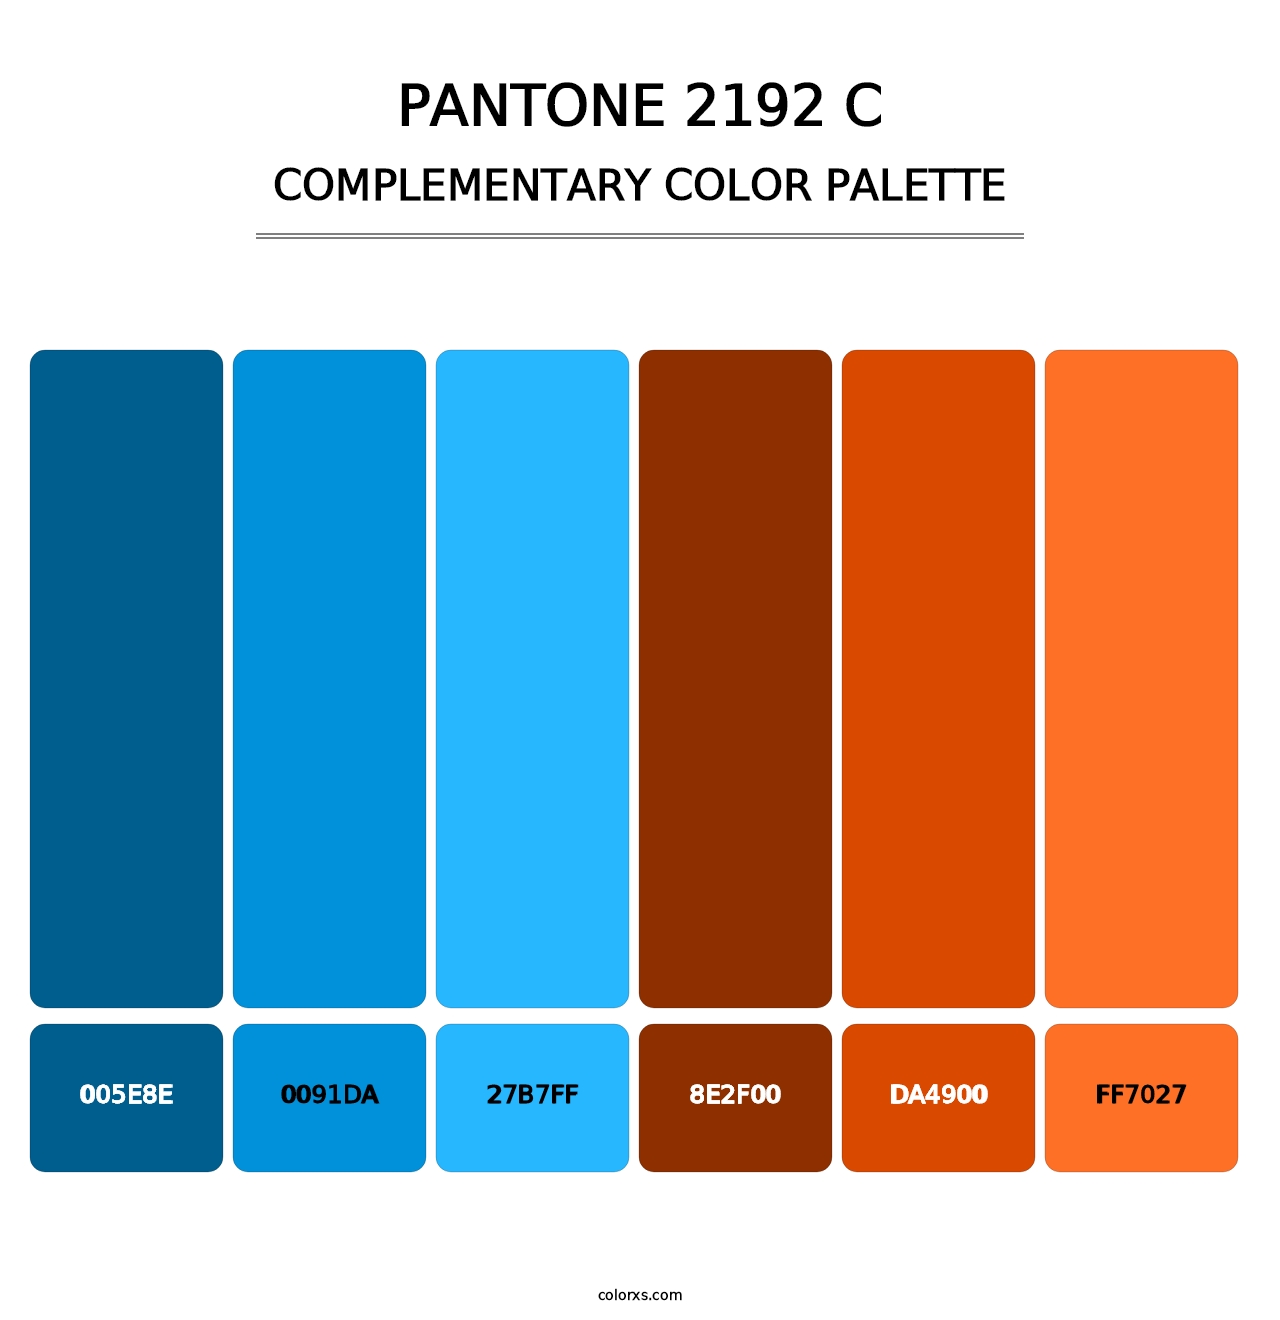 PANTONE 2192 C - Complementary Color Palette